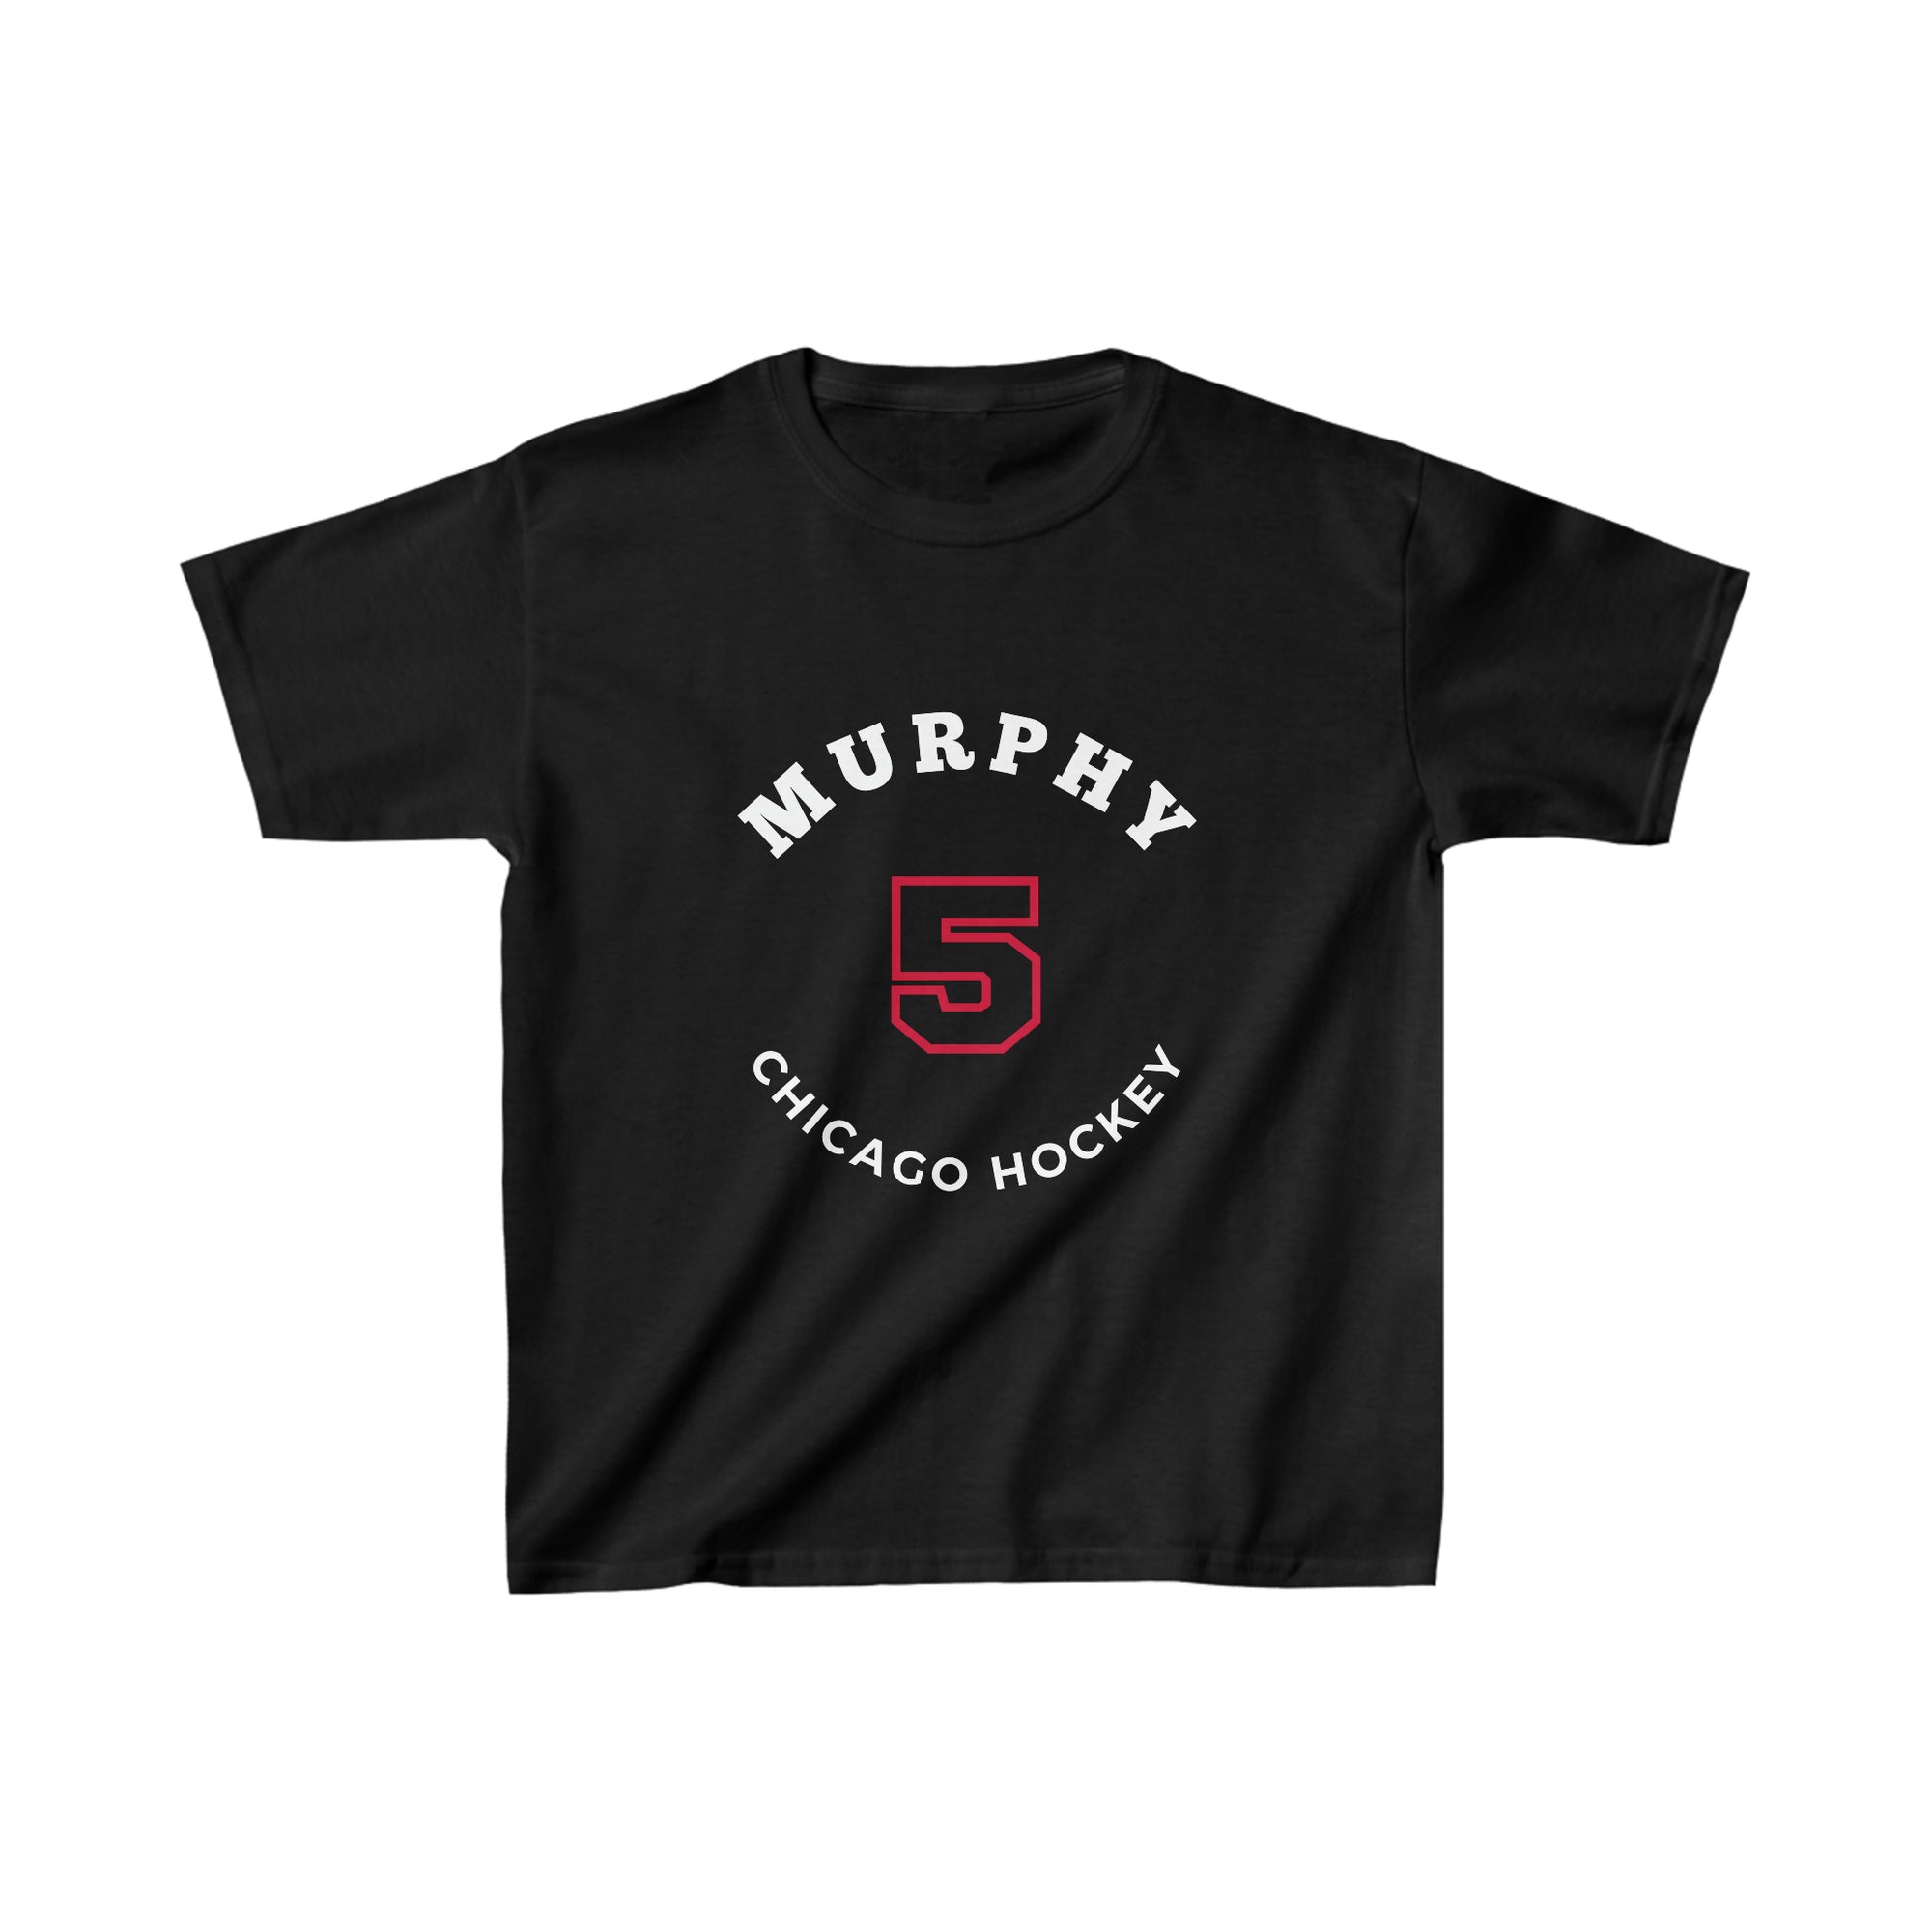 Murphy 5 Chicago Hockey Number Arch Design Kids Tee